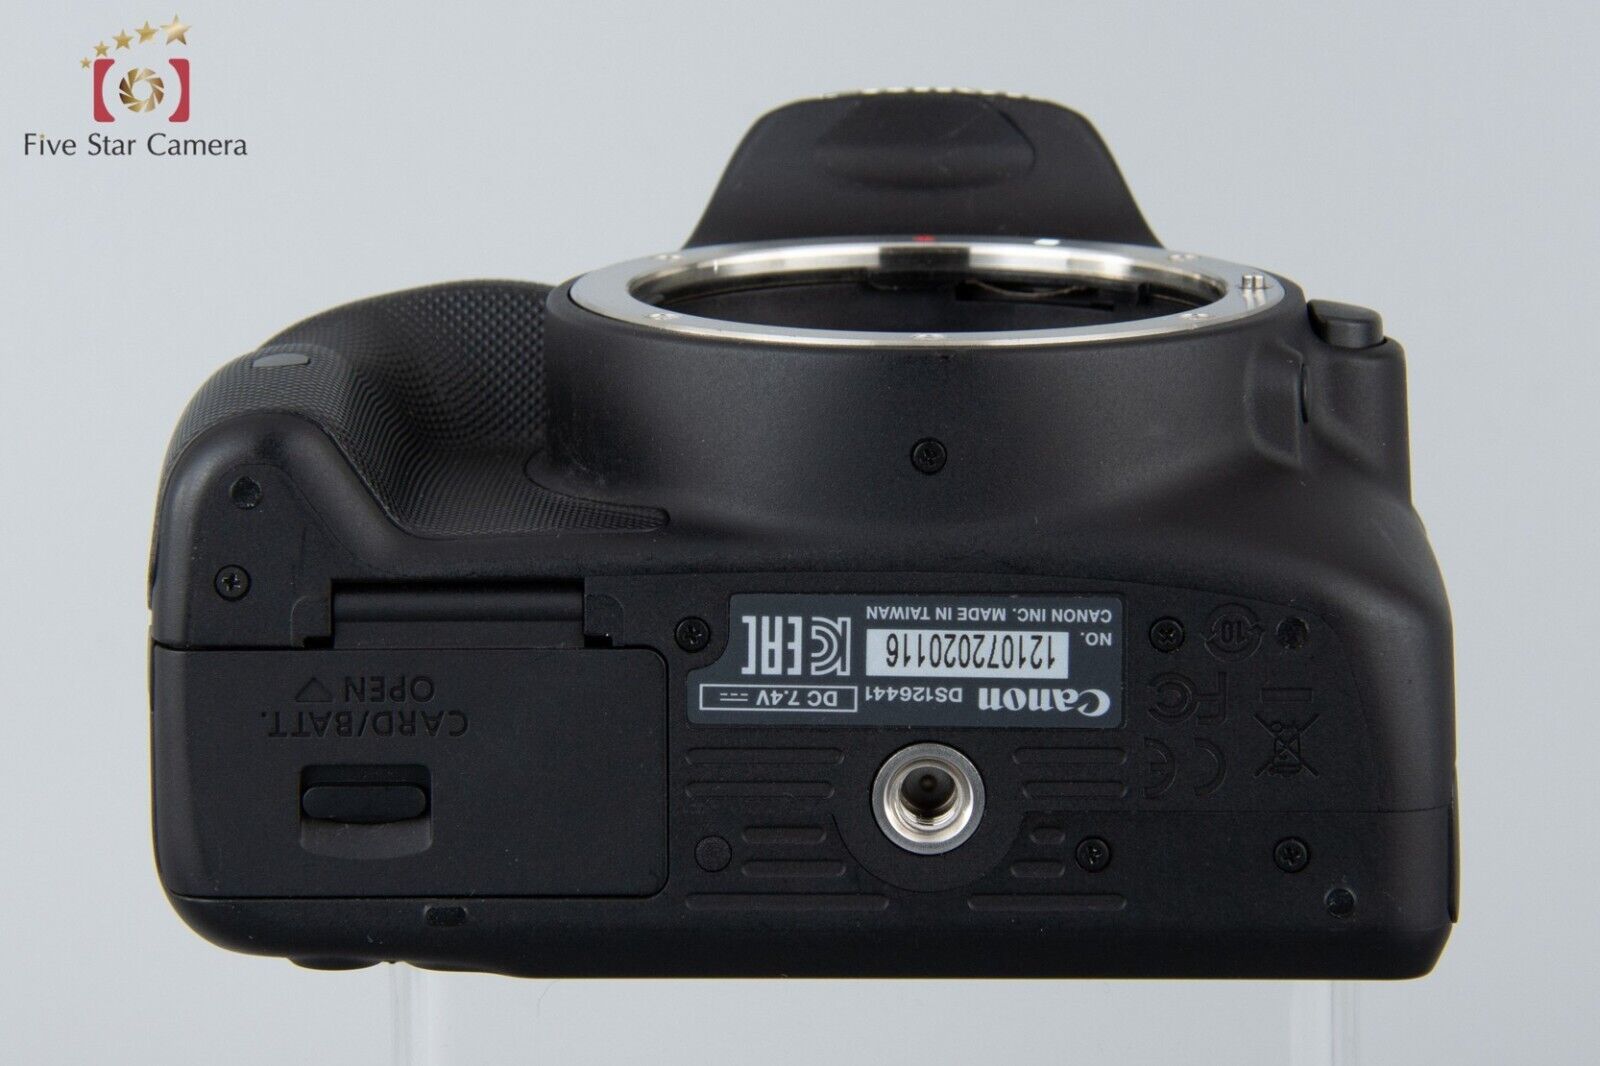 "Shutter count 2,132" Canon EOS Kiss X7 / Rebel SL1 / 100D 18.0 MP DSLR Camera